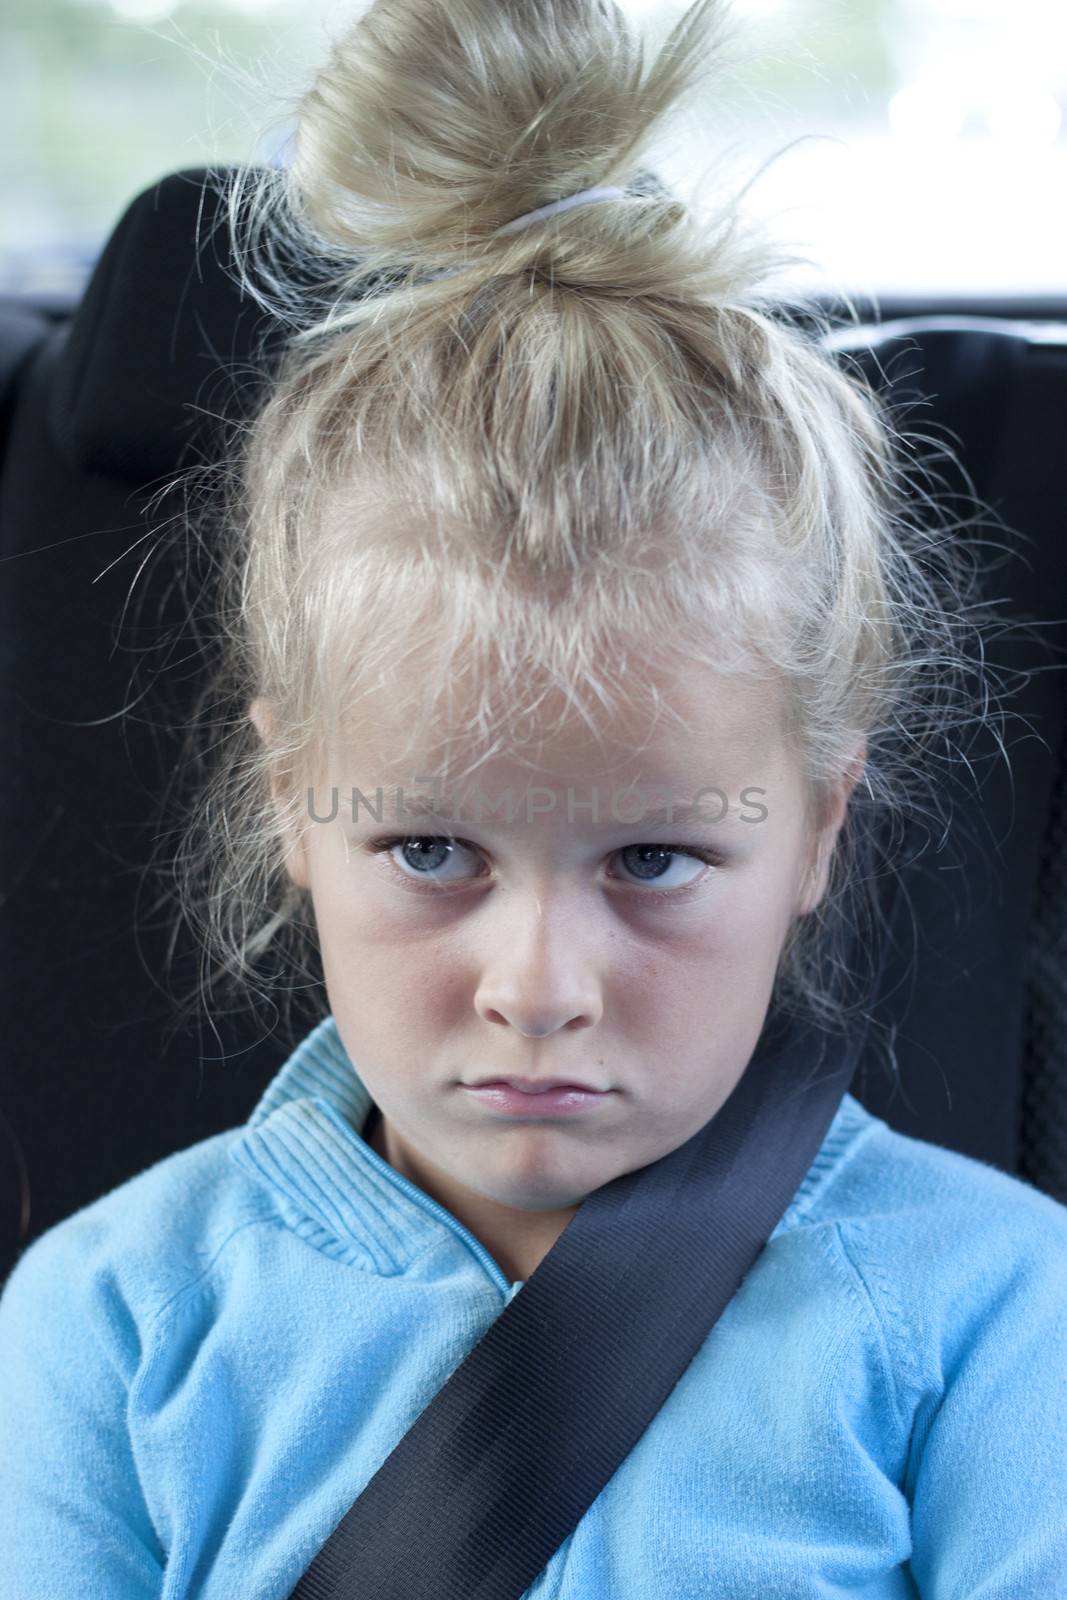 Grumpy kid with seatbelt in car by annems